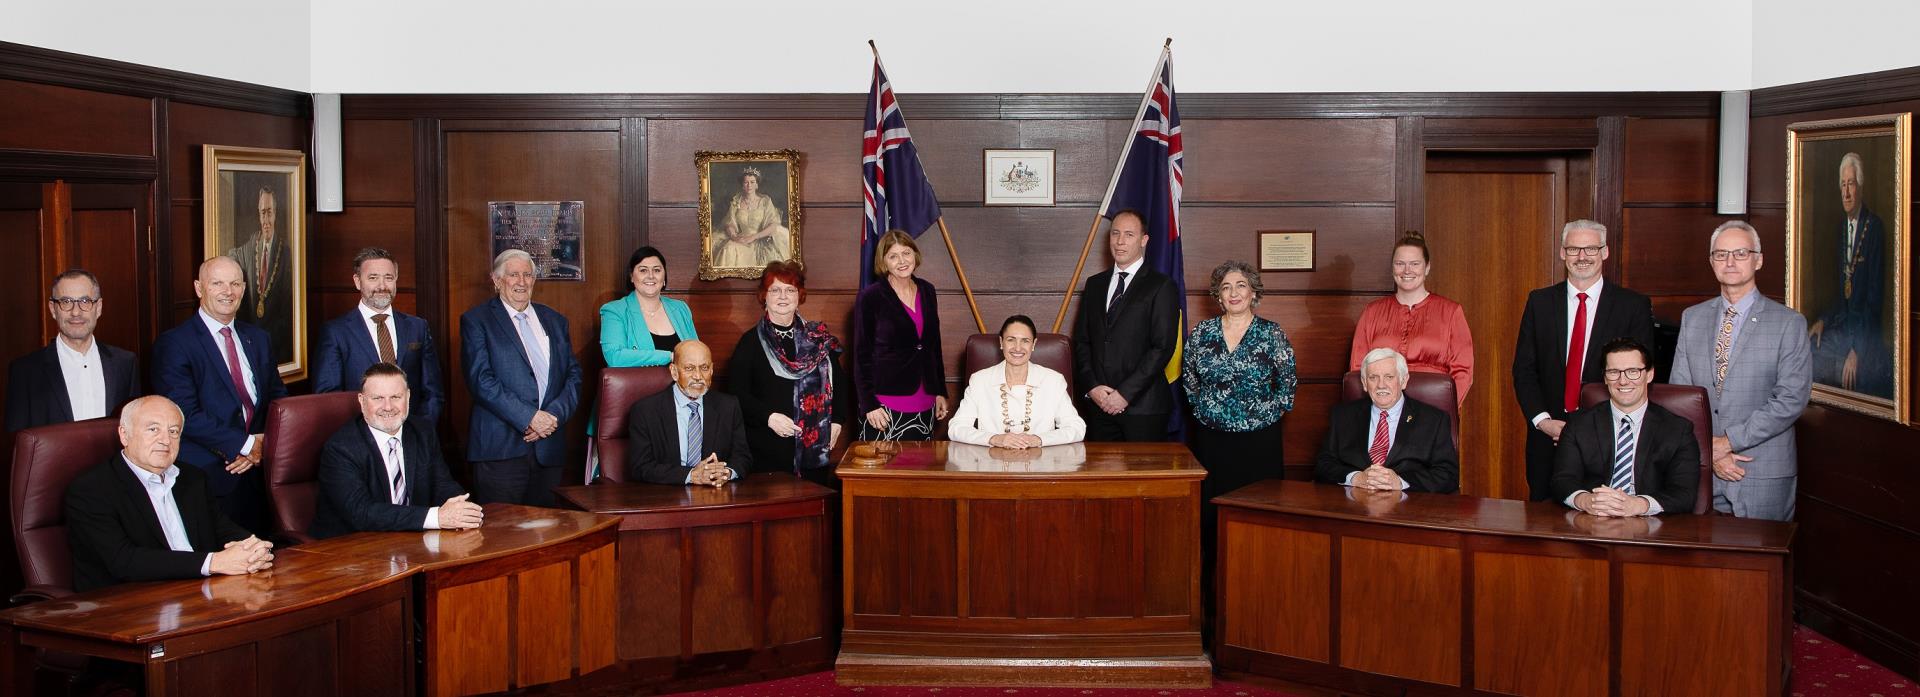 Council Members Image